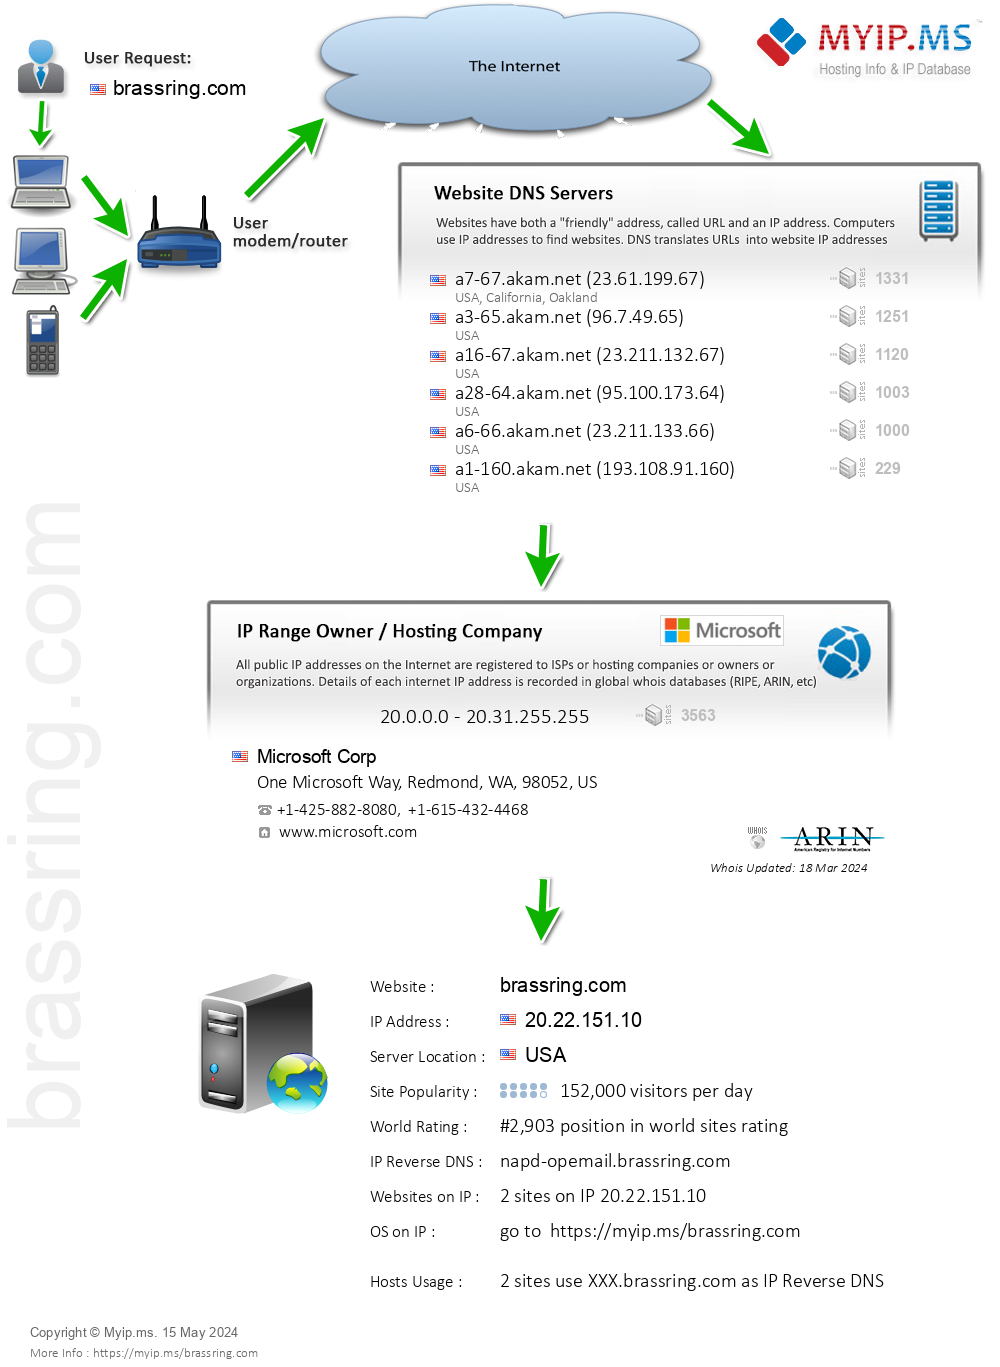 Brassring.com - Website Hosting Visual IP Diagram